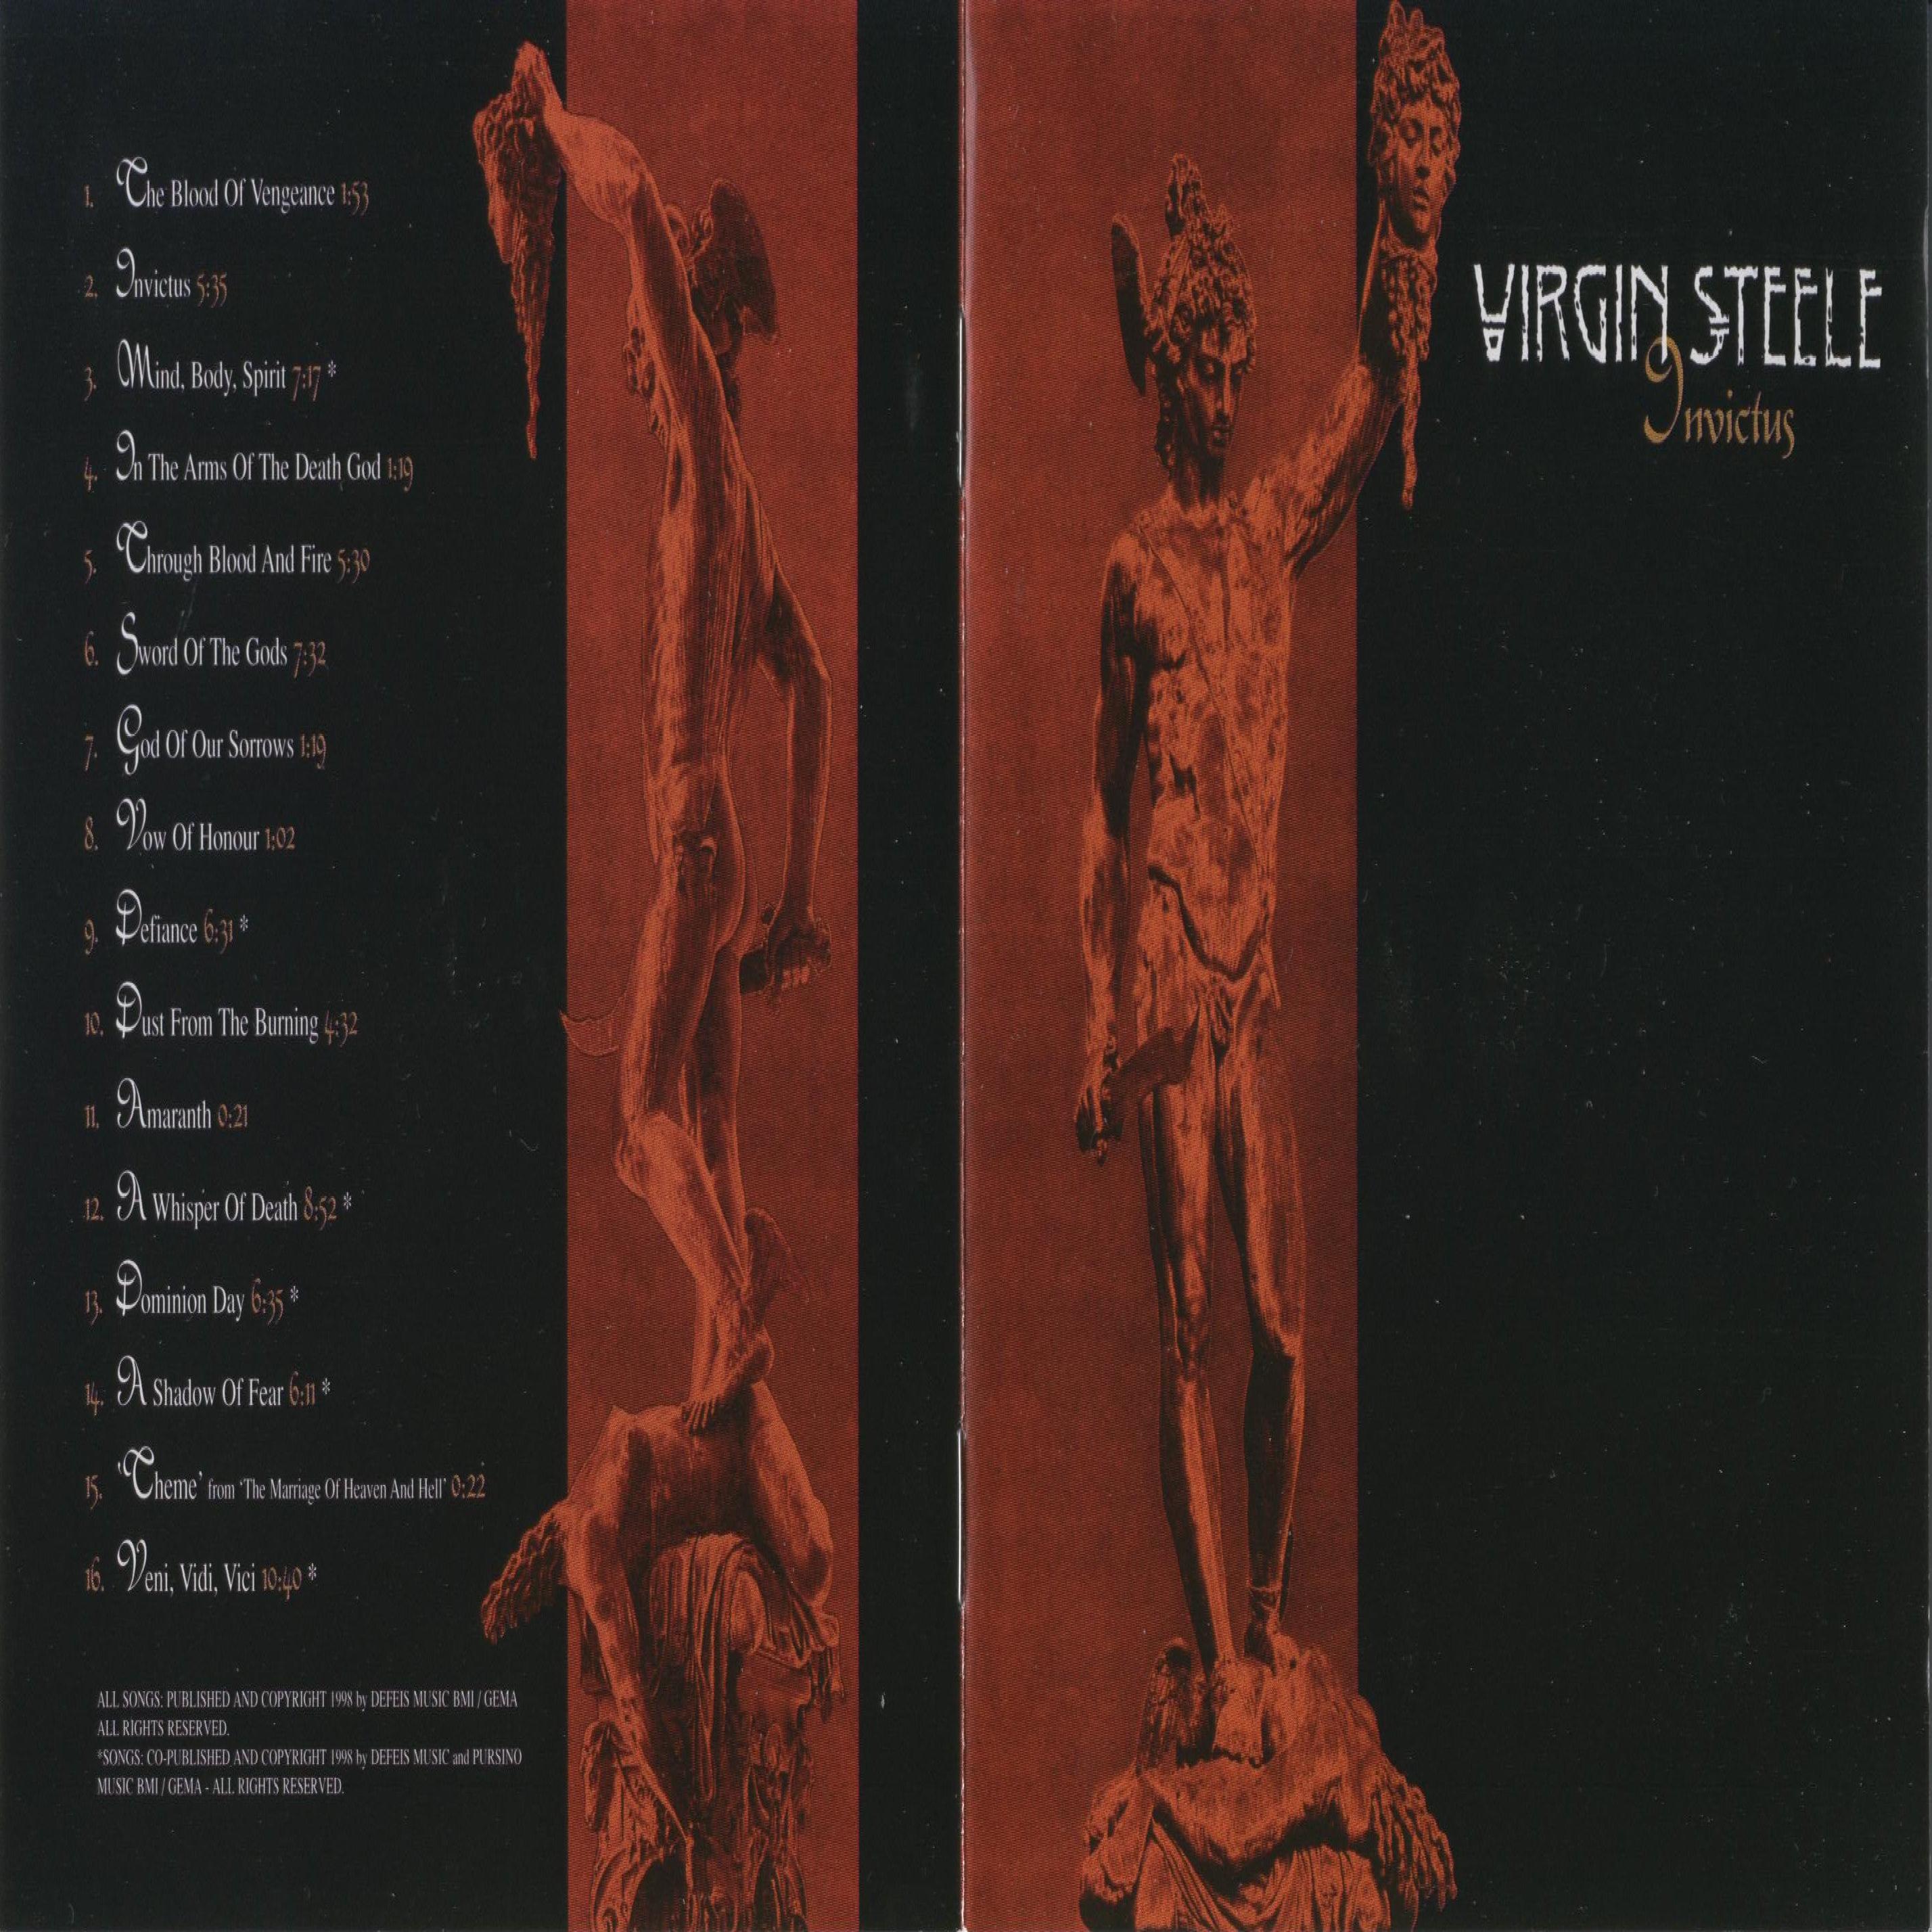 Virgin Steele - Invictus (1998)